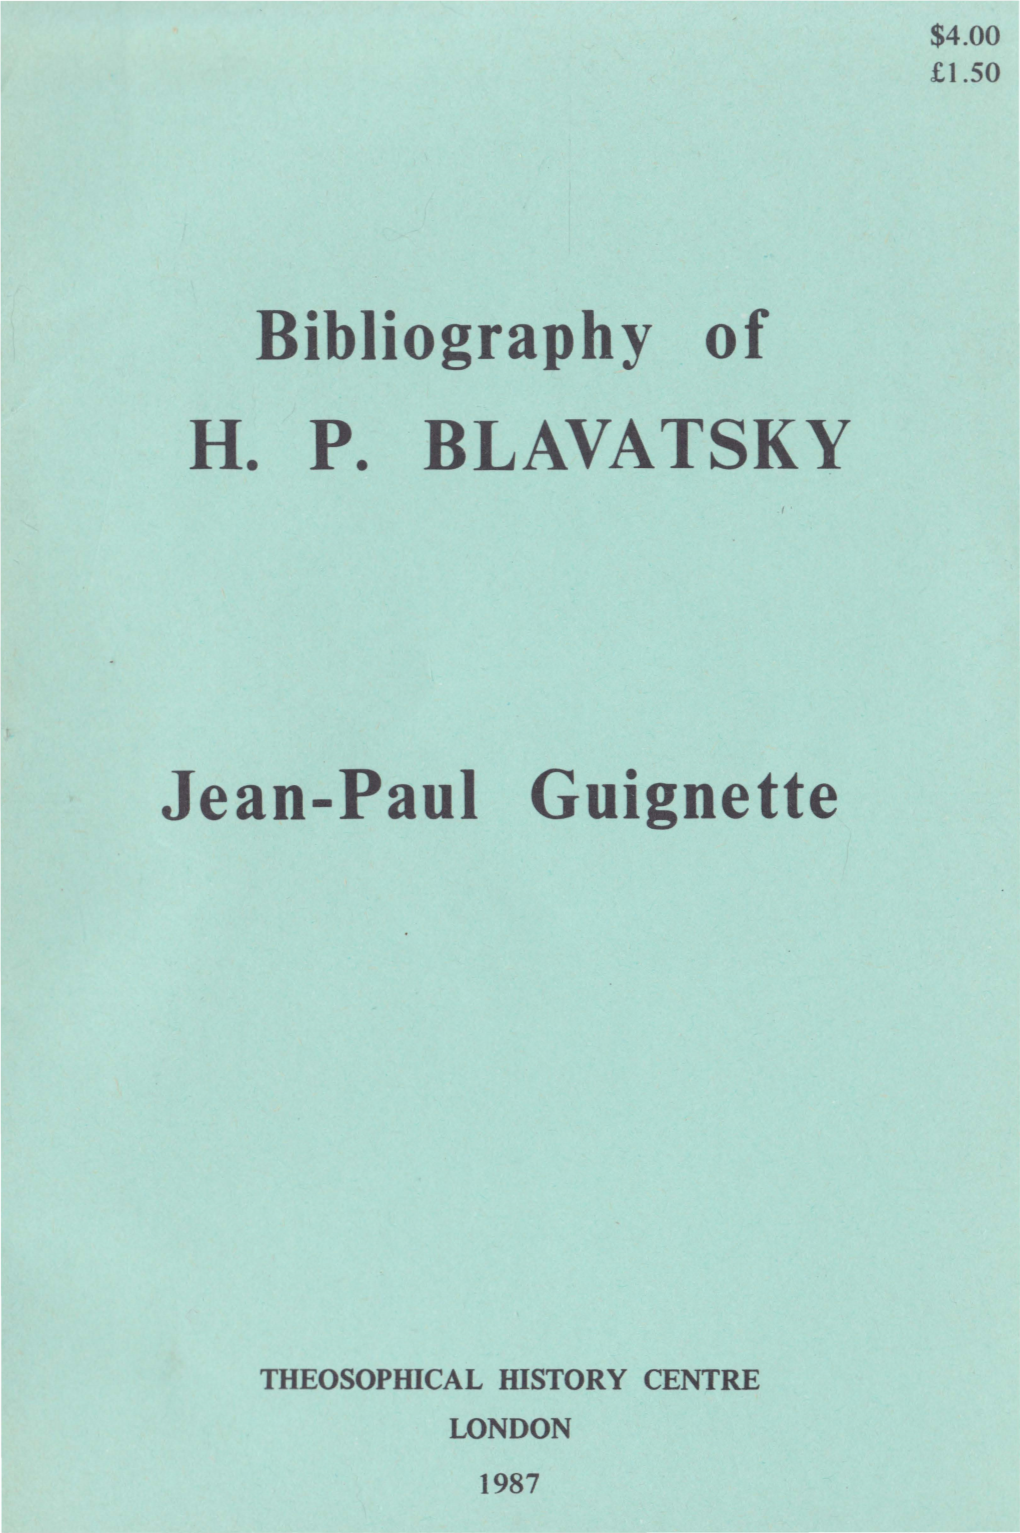 Bibliography of H. P. BLAVATSKY